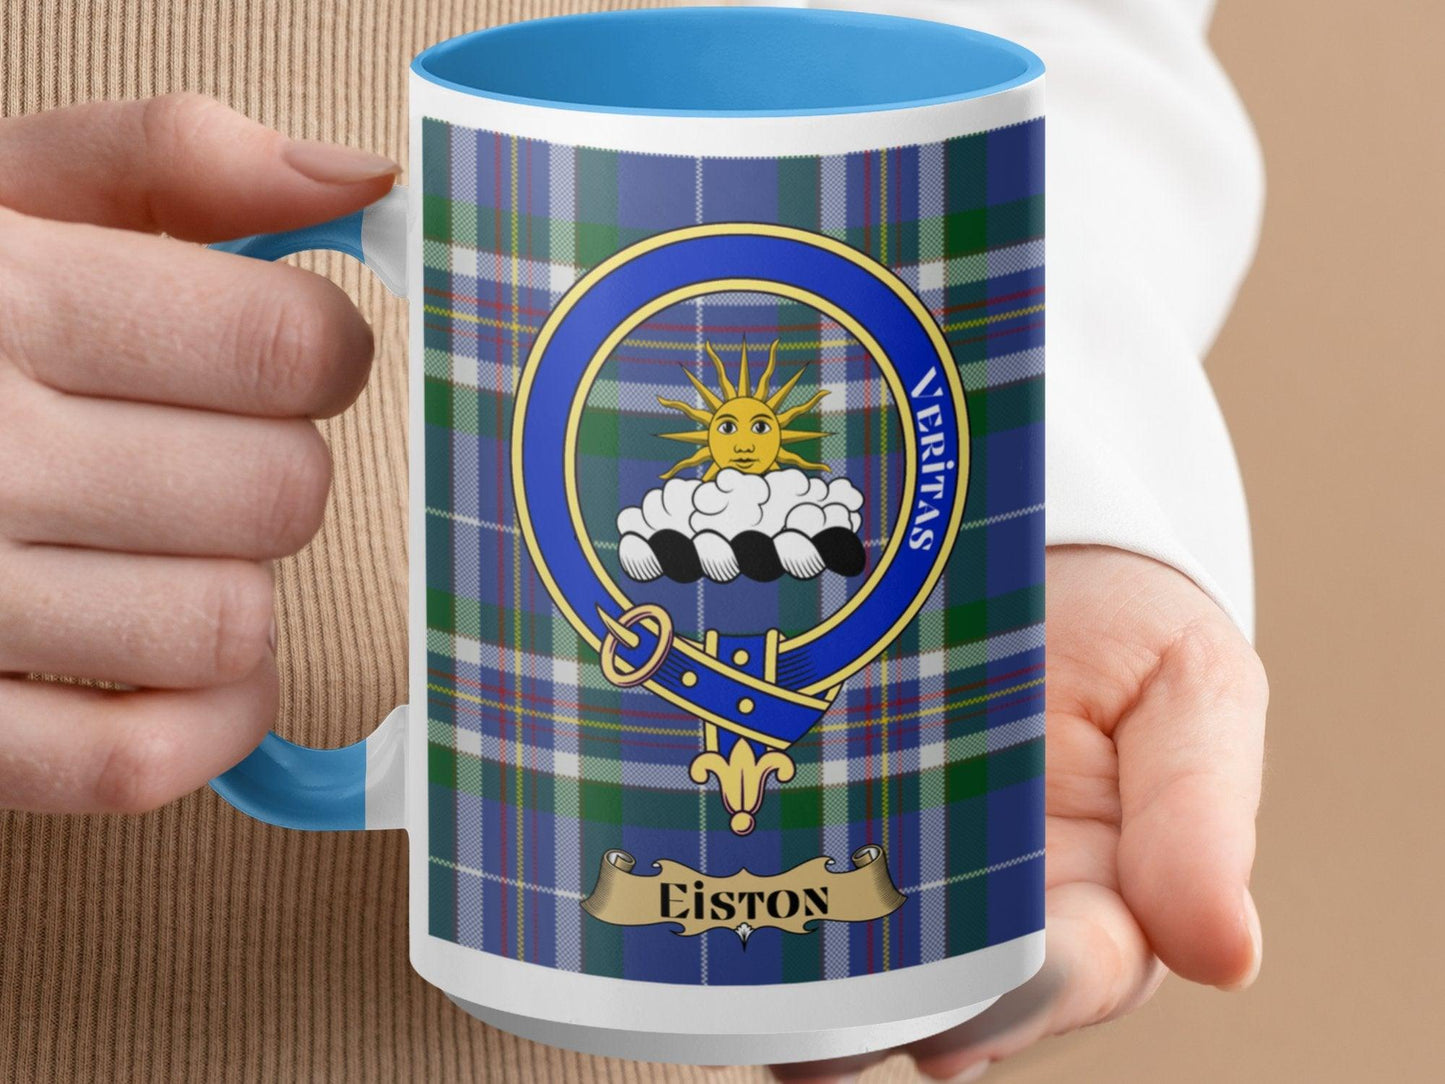 Stylish Scottish Clan Crest Plaid Mug for Unique Gifts - Living Stone Gifts